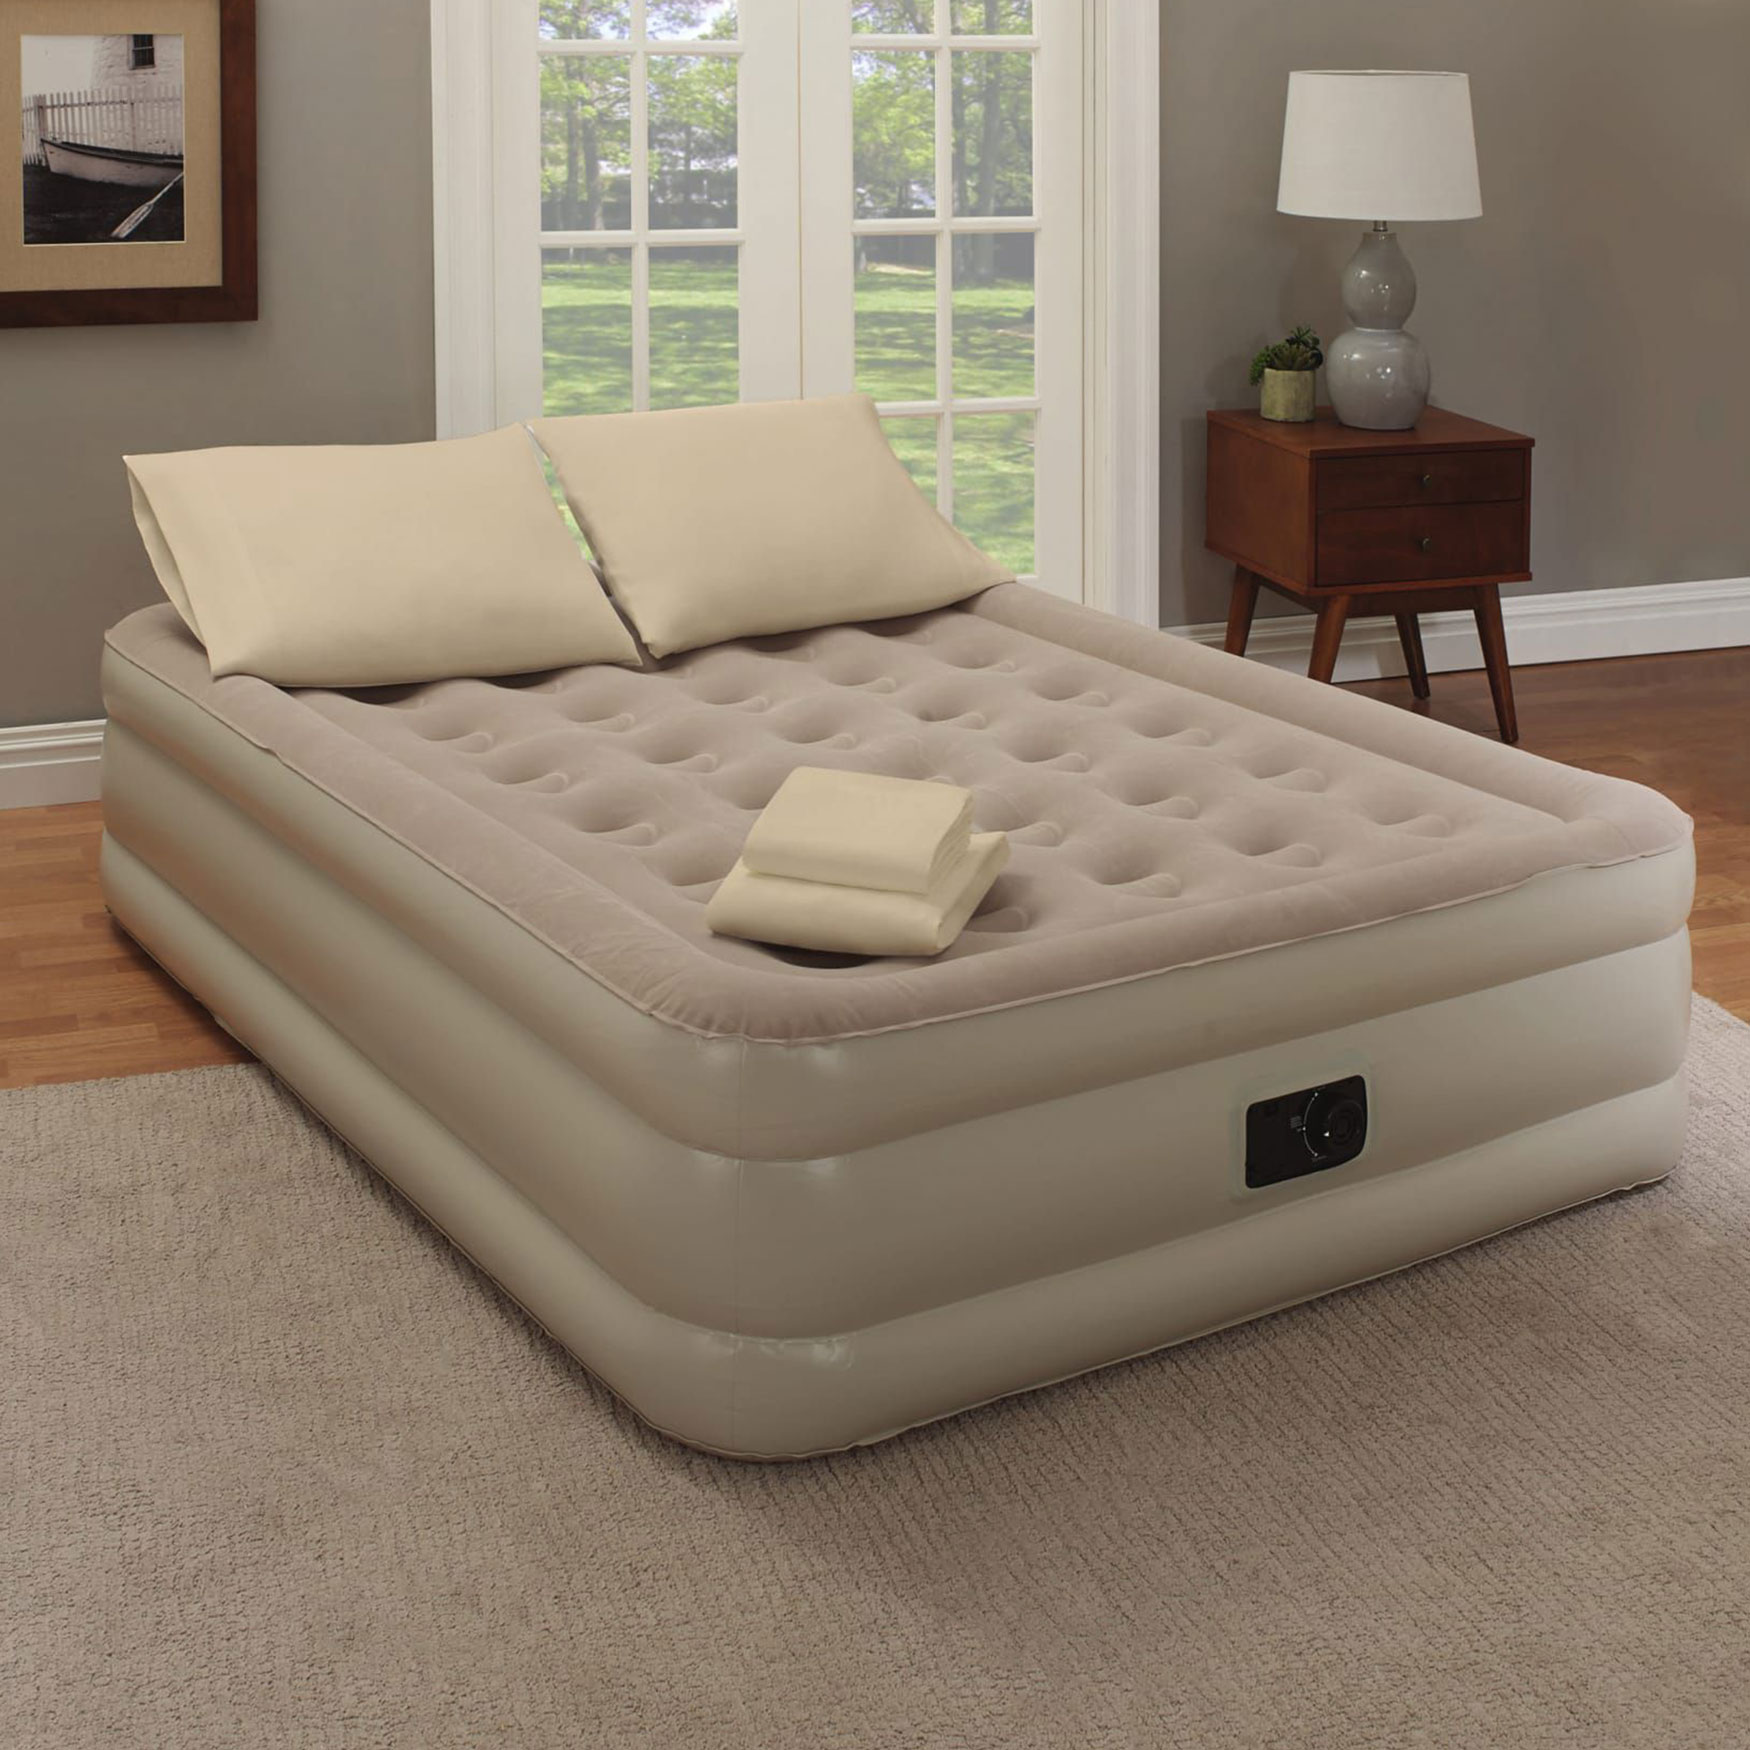 Air Mattress Bedding Set Brylane Home, Air Bed Sheets Twin